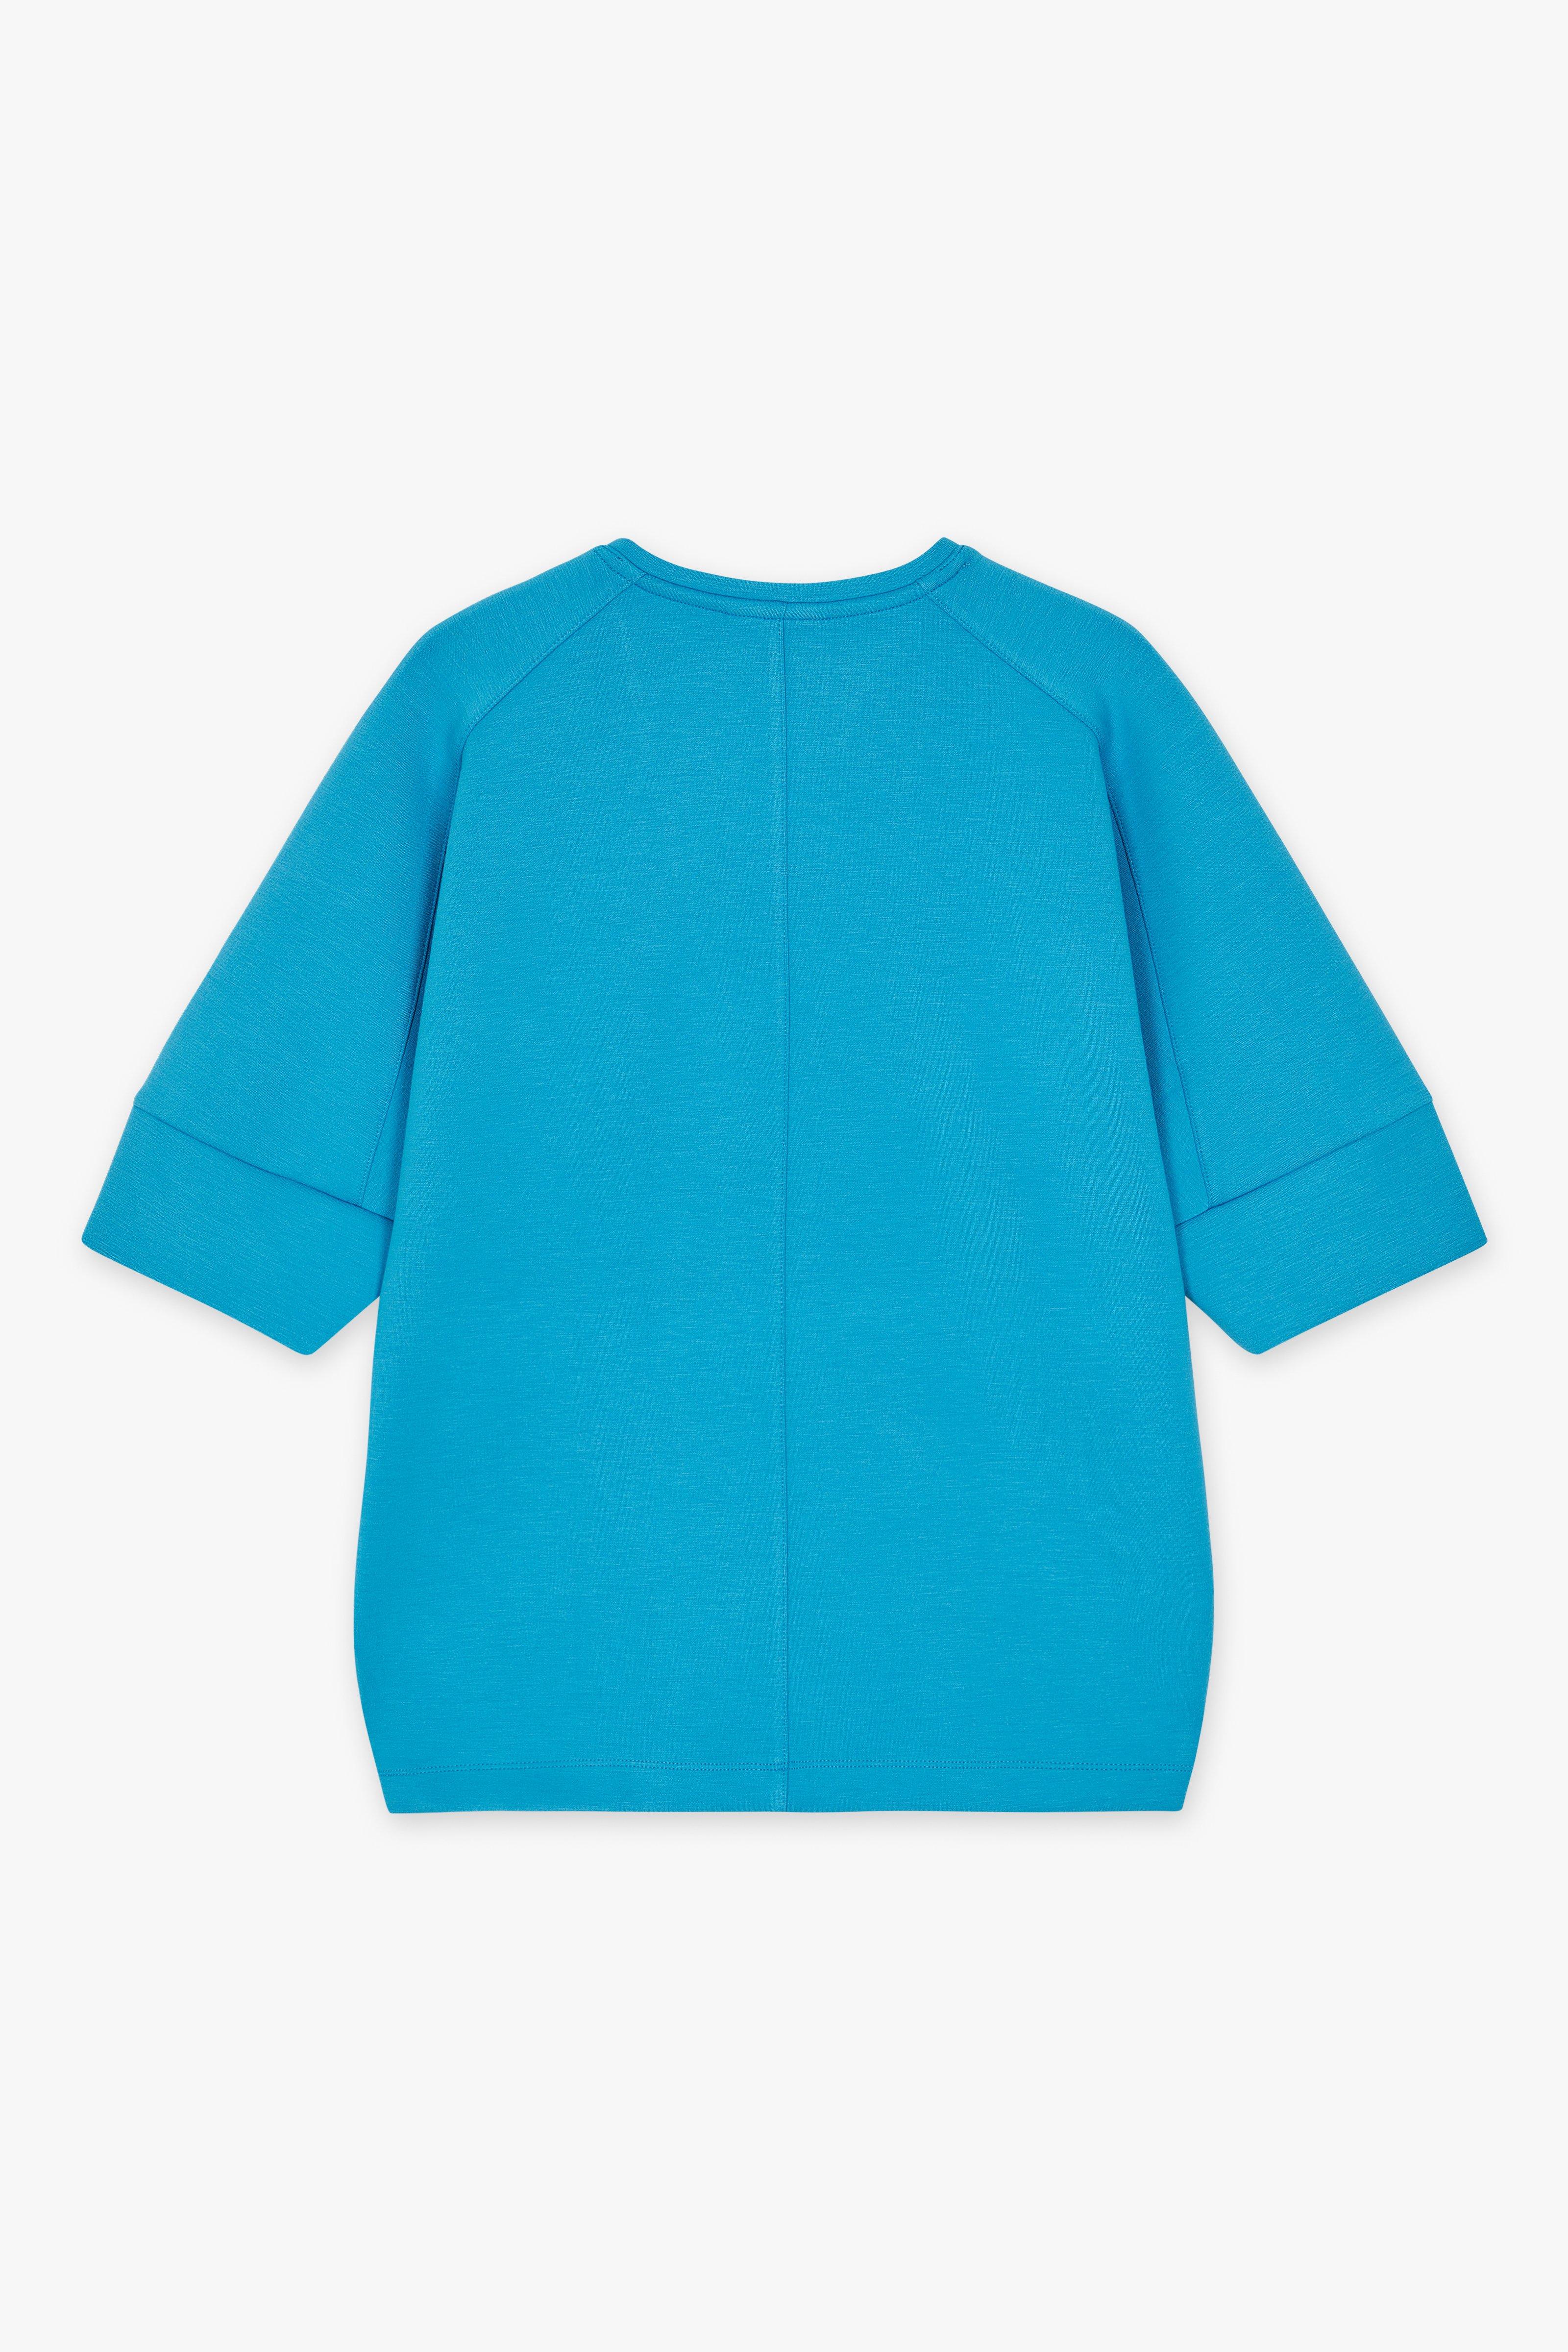 CKS Dames - ELDODEEP - sweater - felblauw